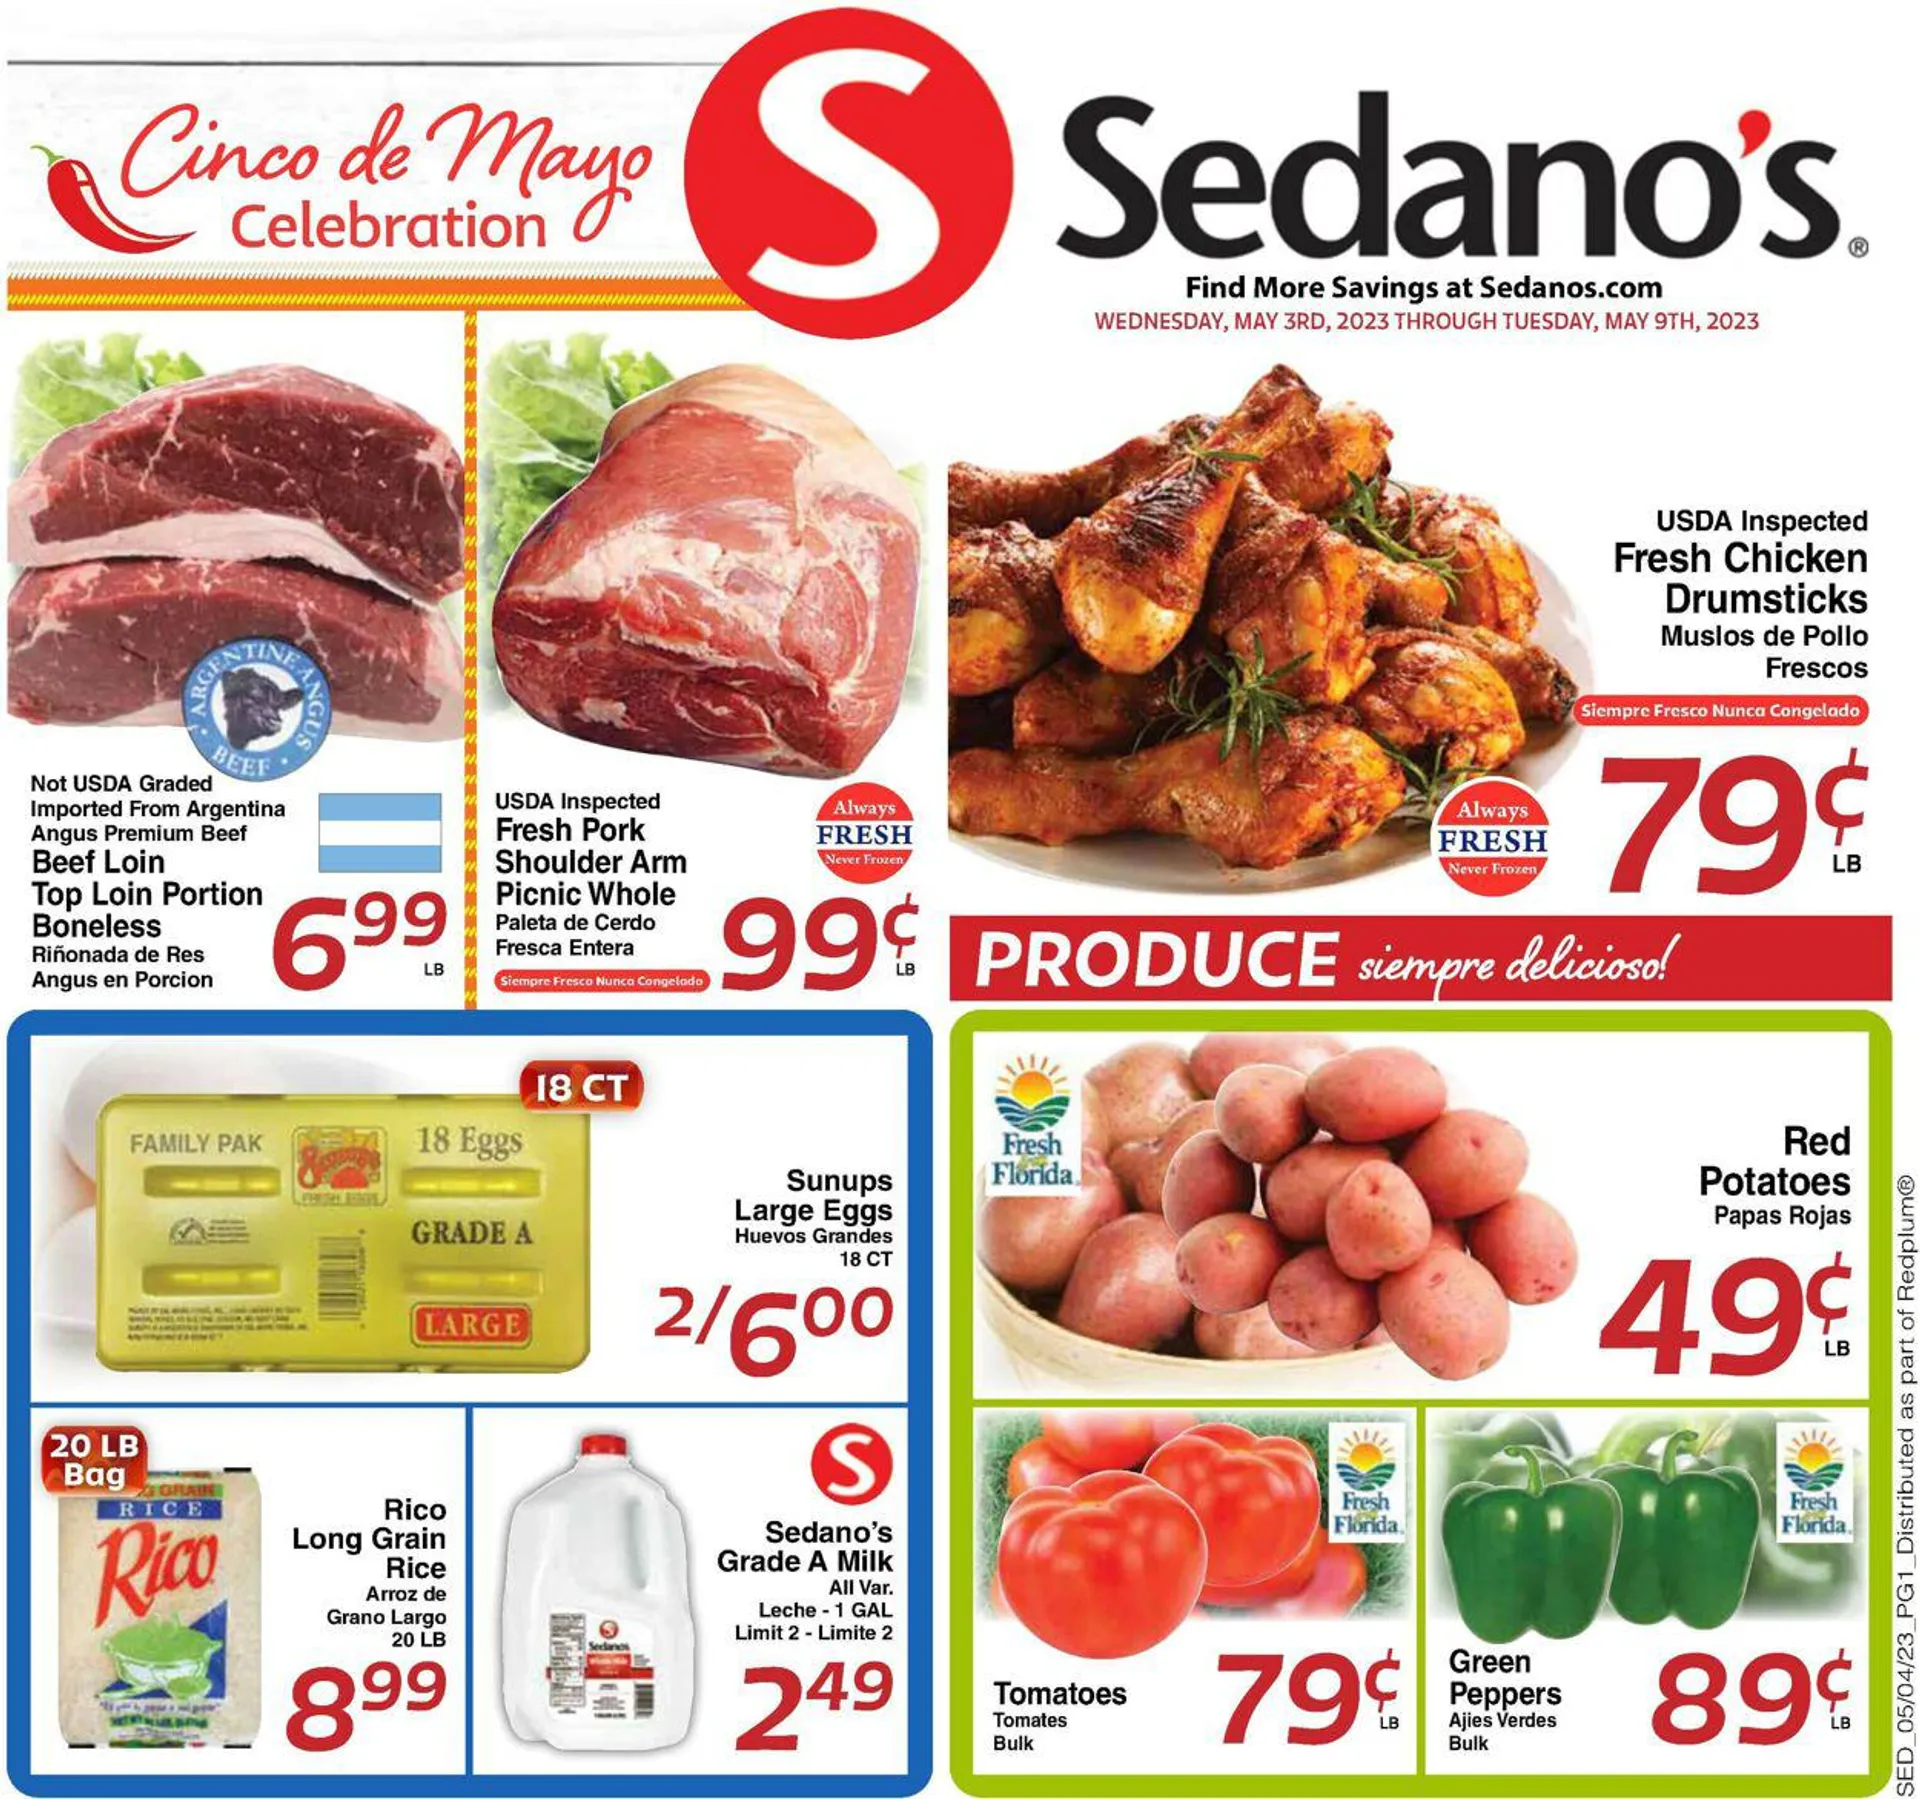 Sedanos Current weekly ad - 1